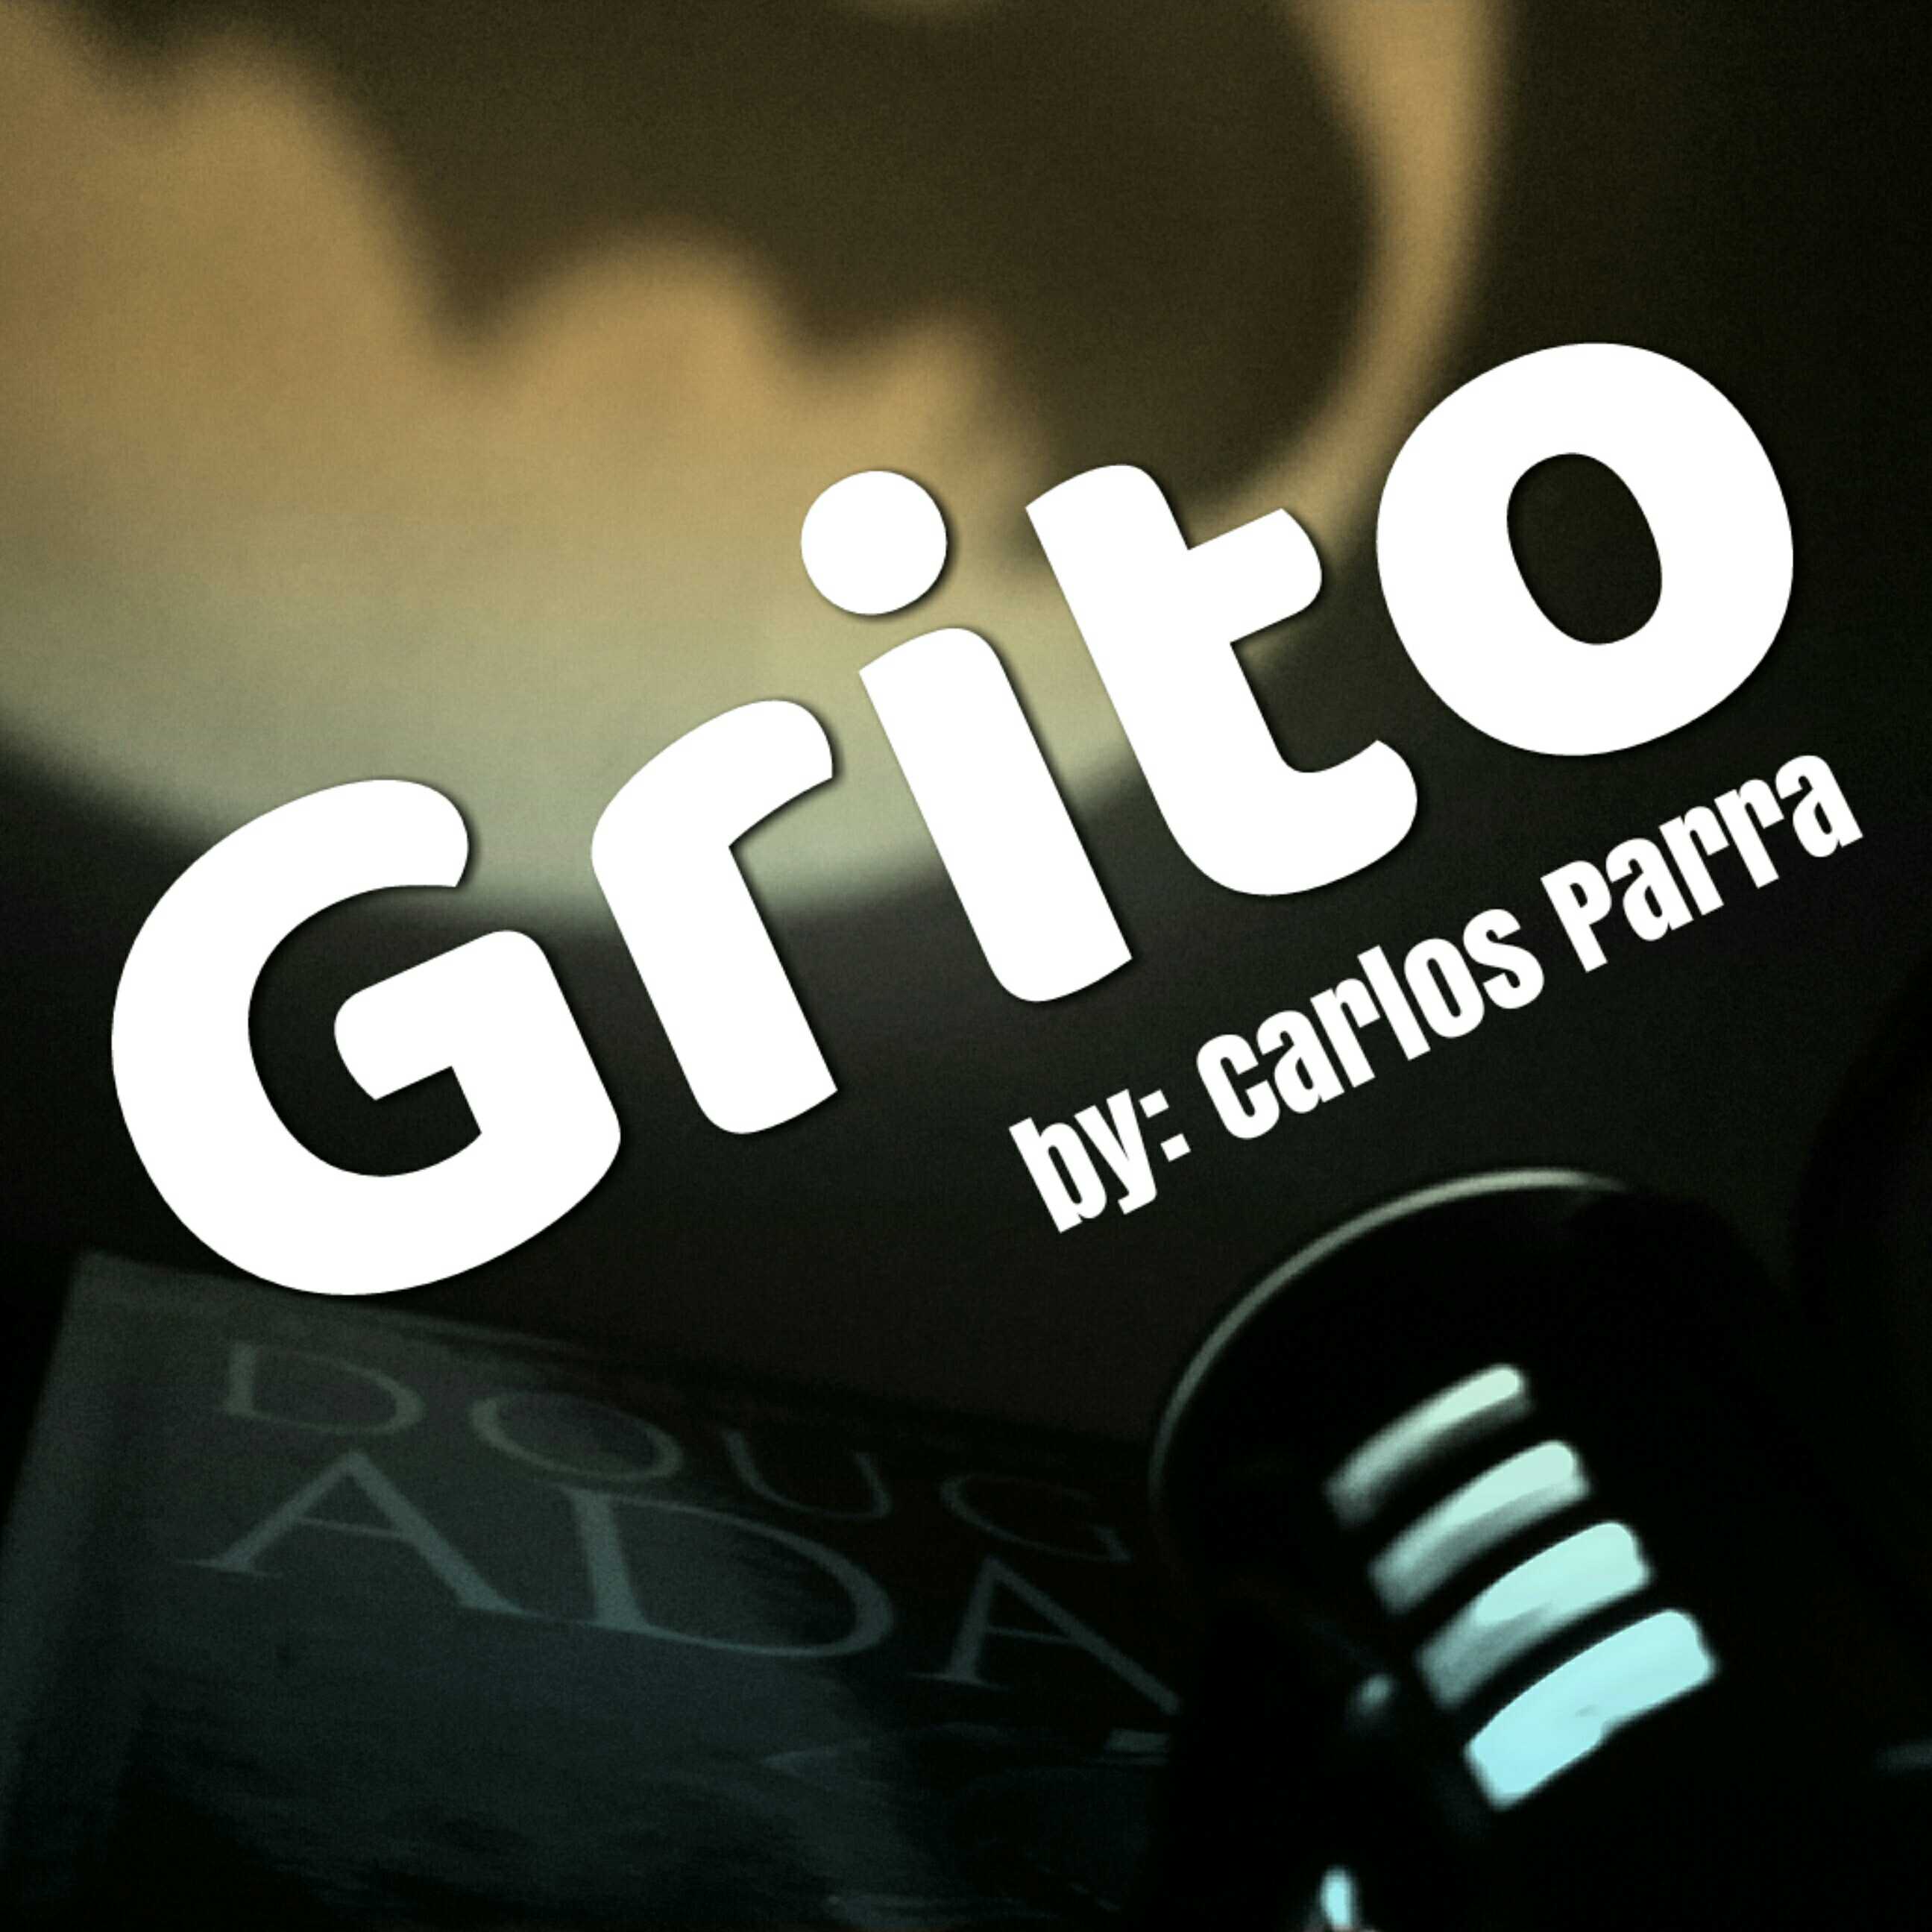 Grito #02 - A Onda (Die Welle)